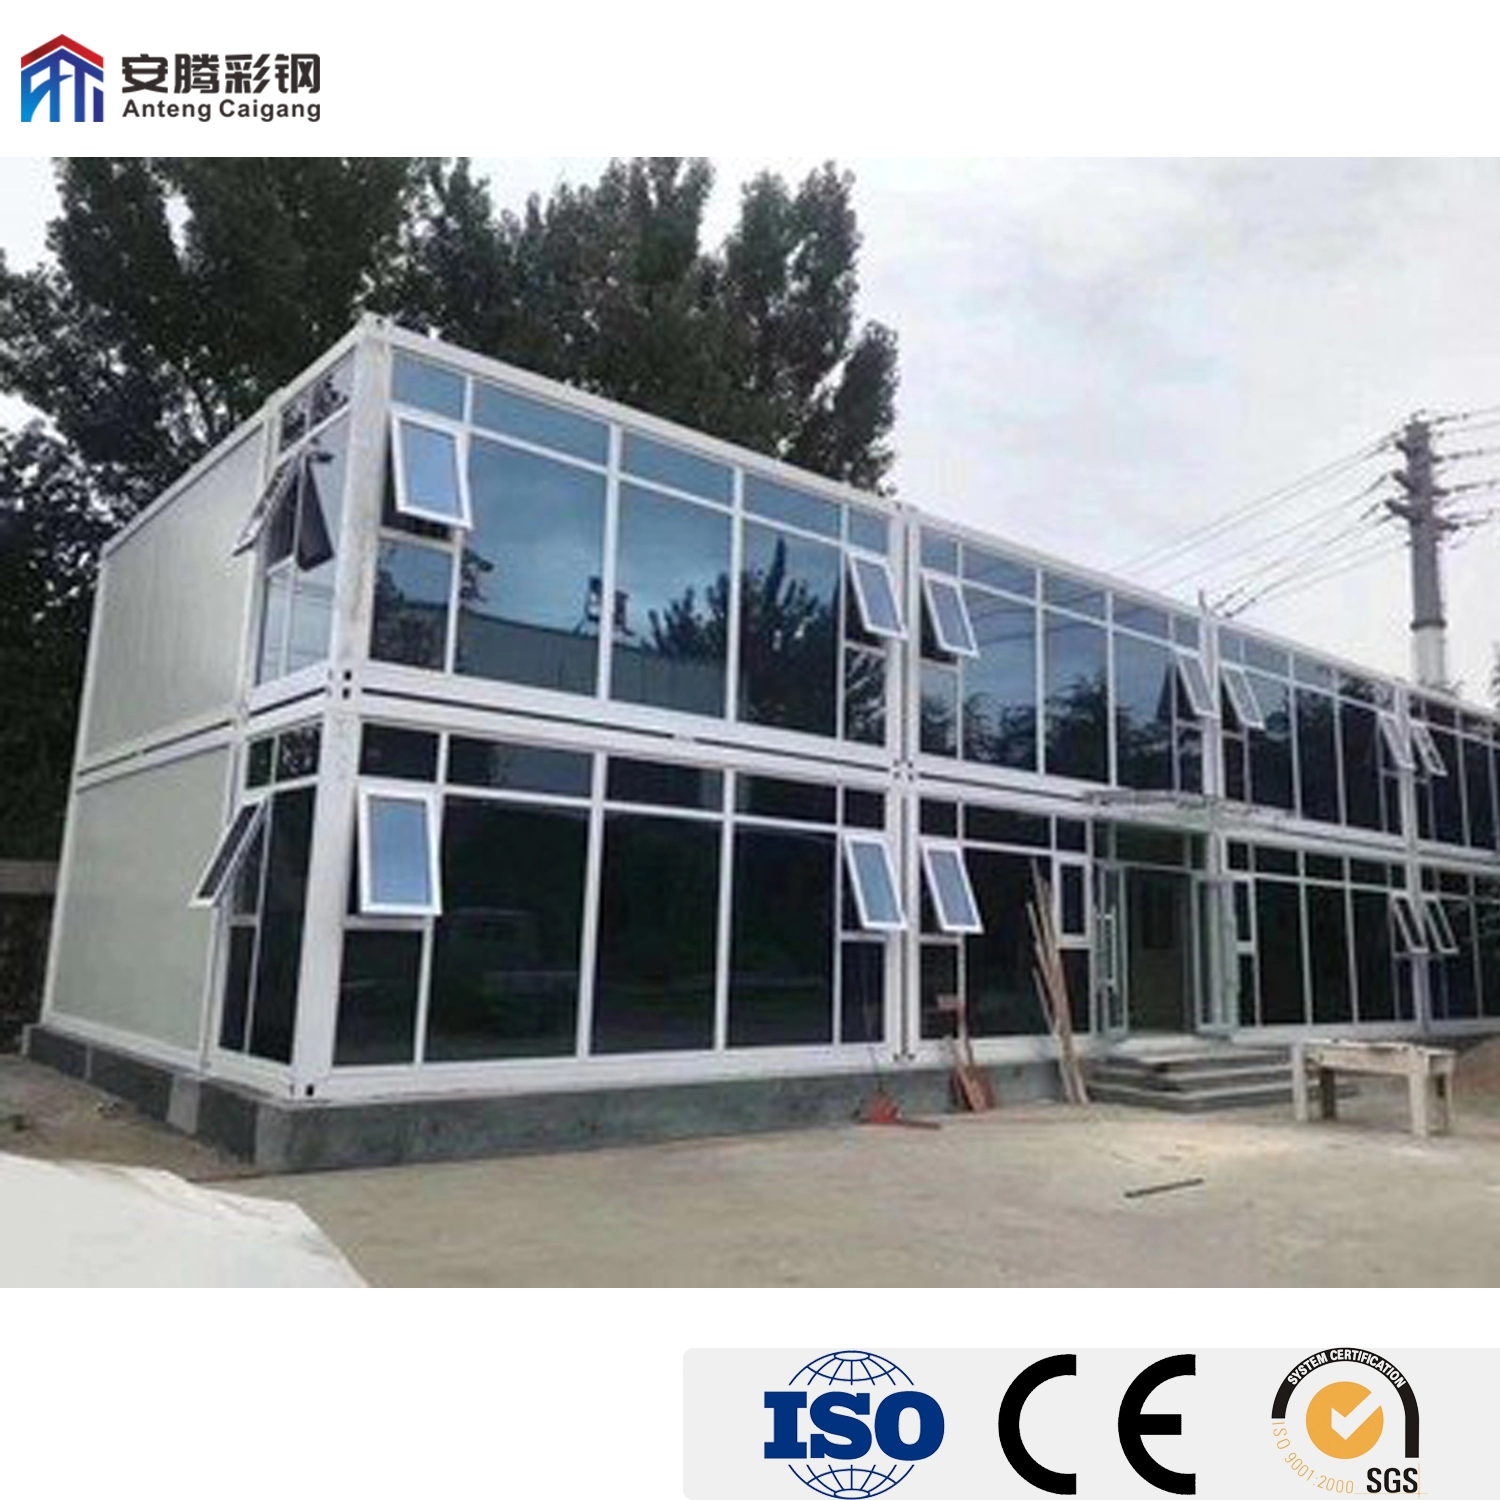 Sitio de construcción de fabricación profesional de edificios de estructura de acero para oficinas